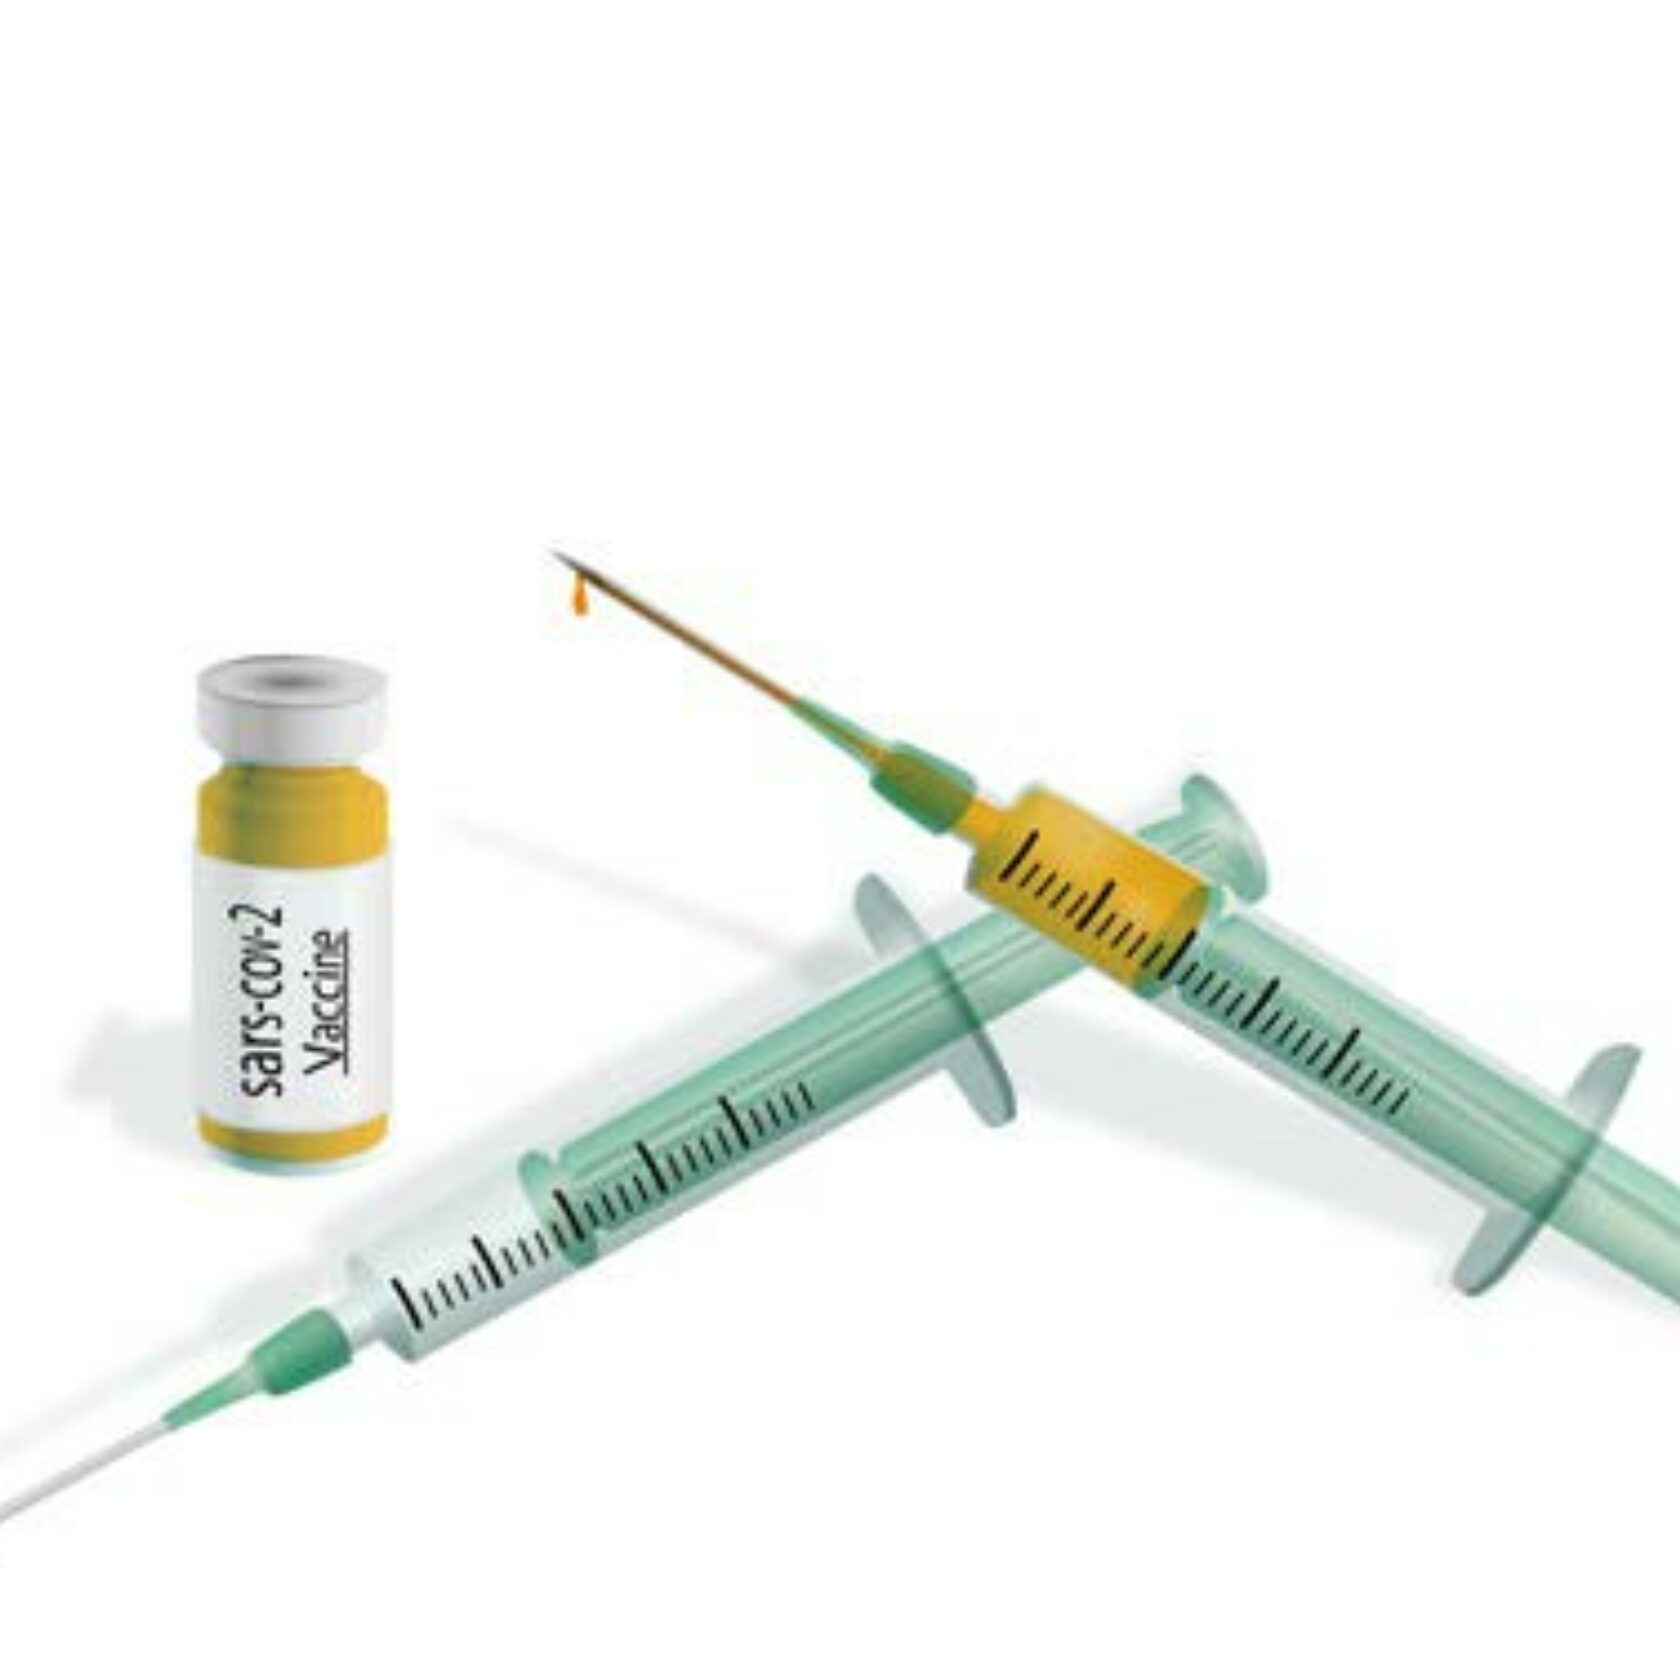 COV-19-Boosterimpfung